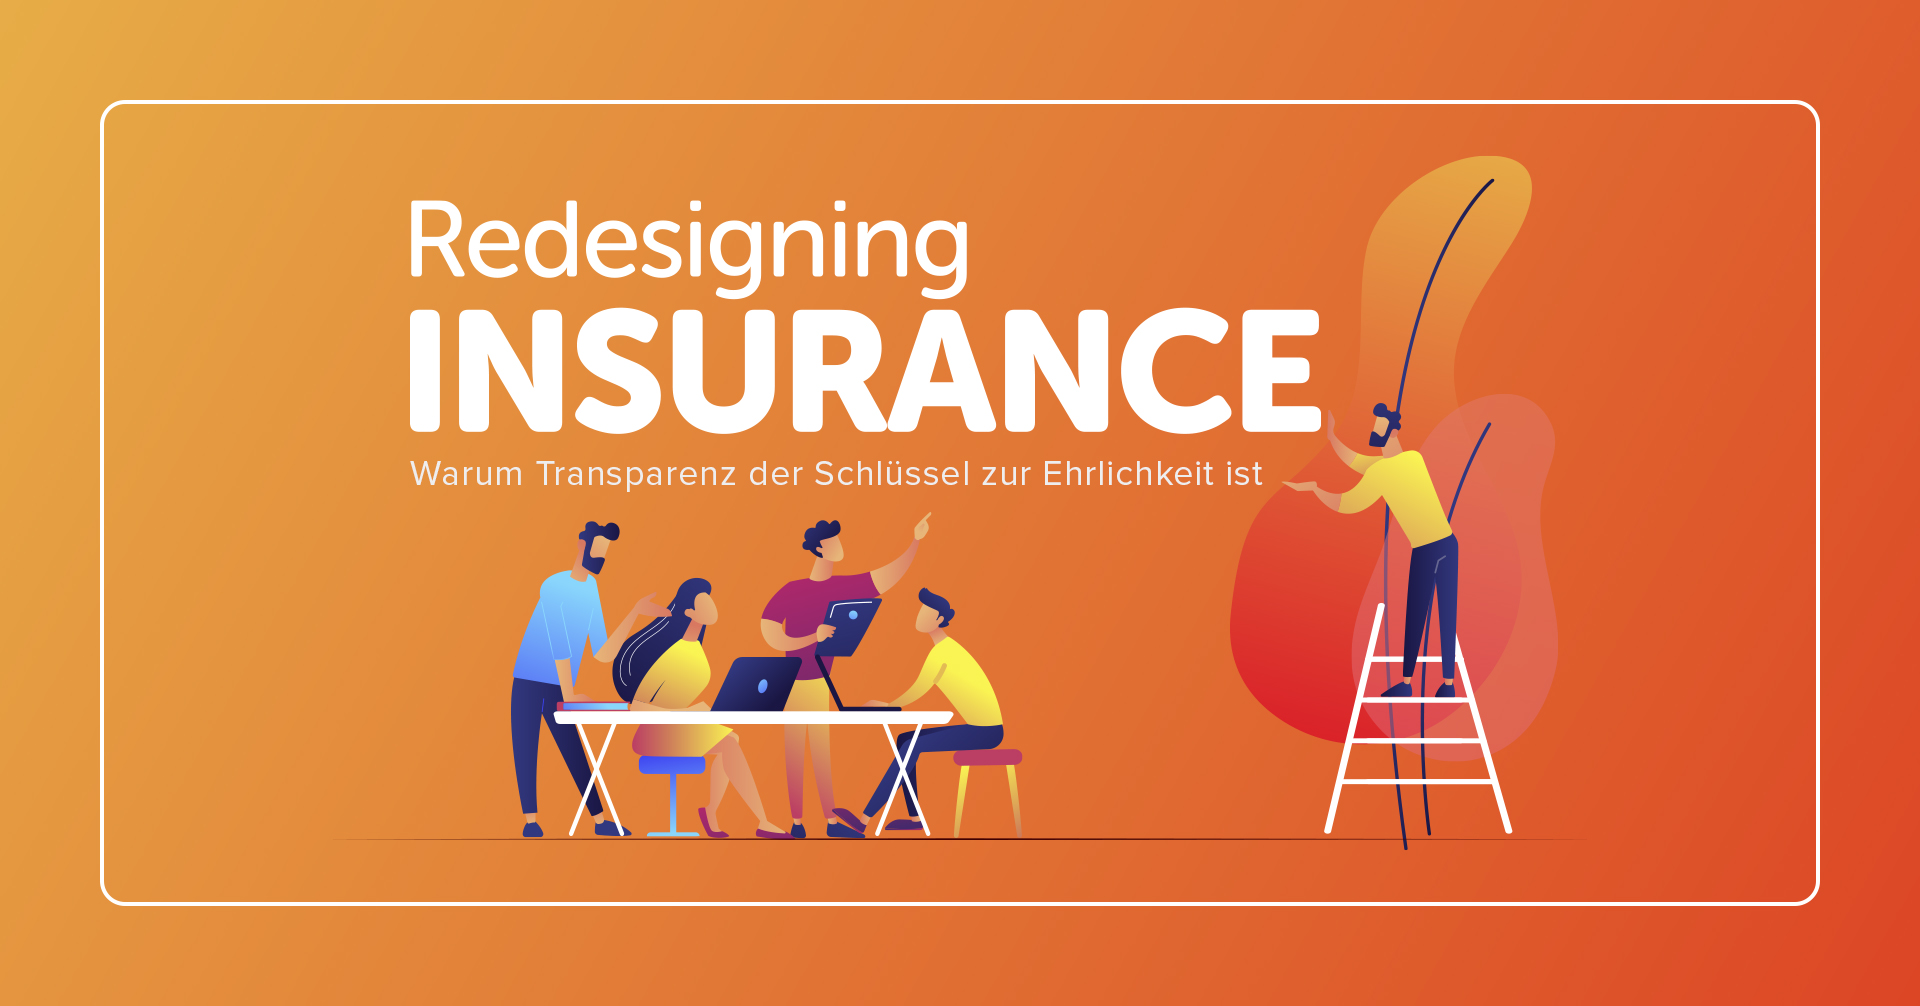 Redesigning-insurance-linkedin-image-DE